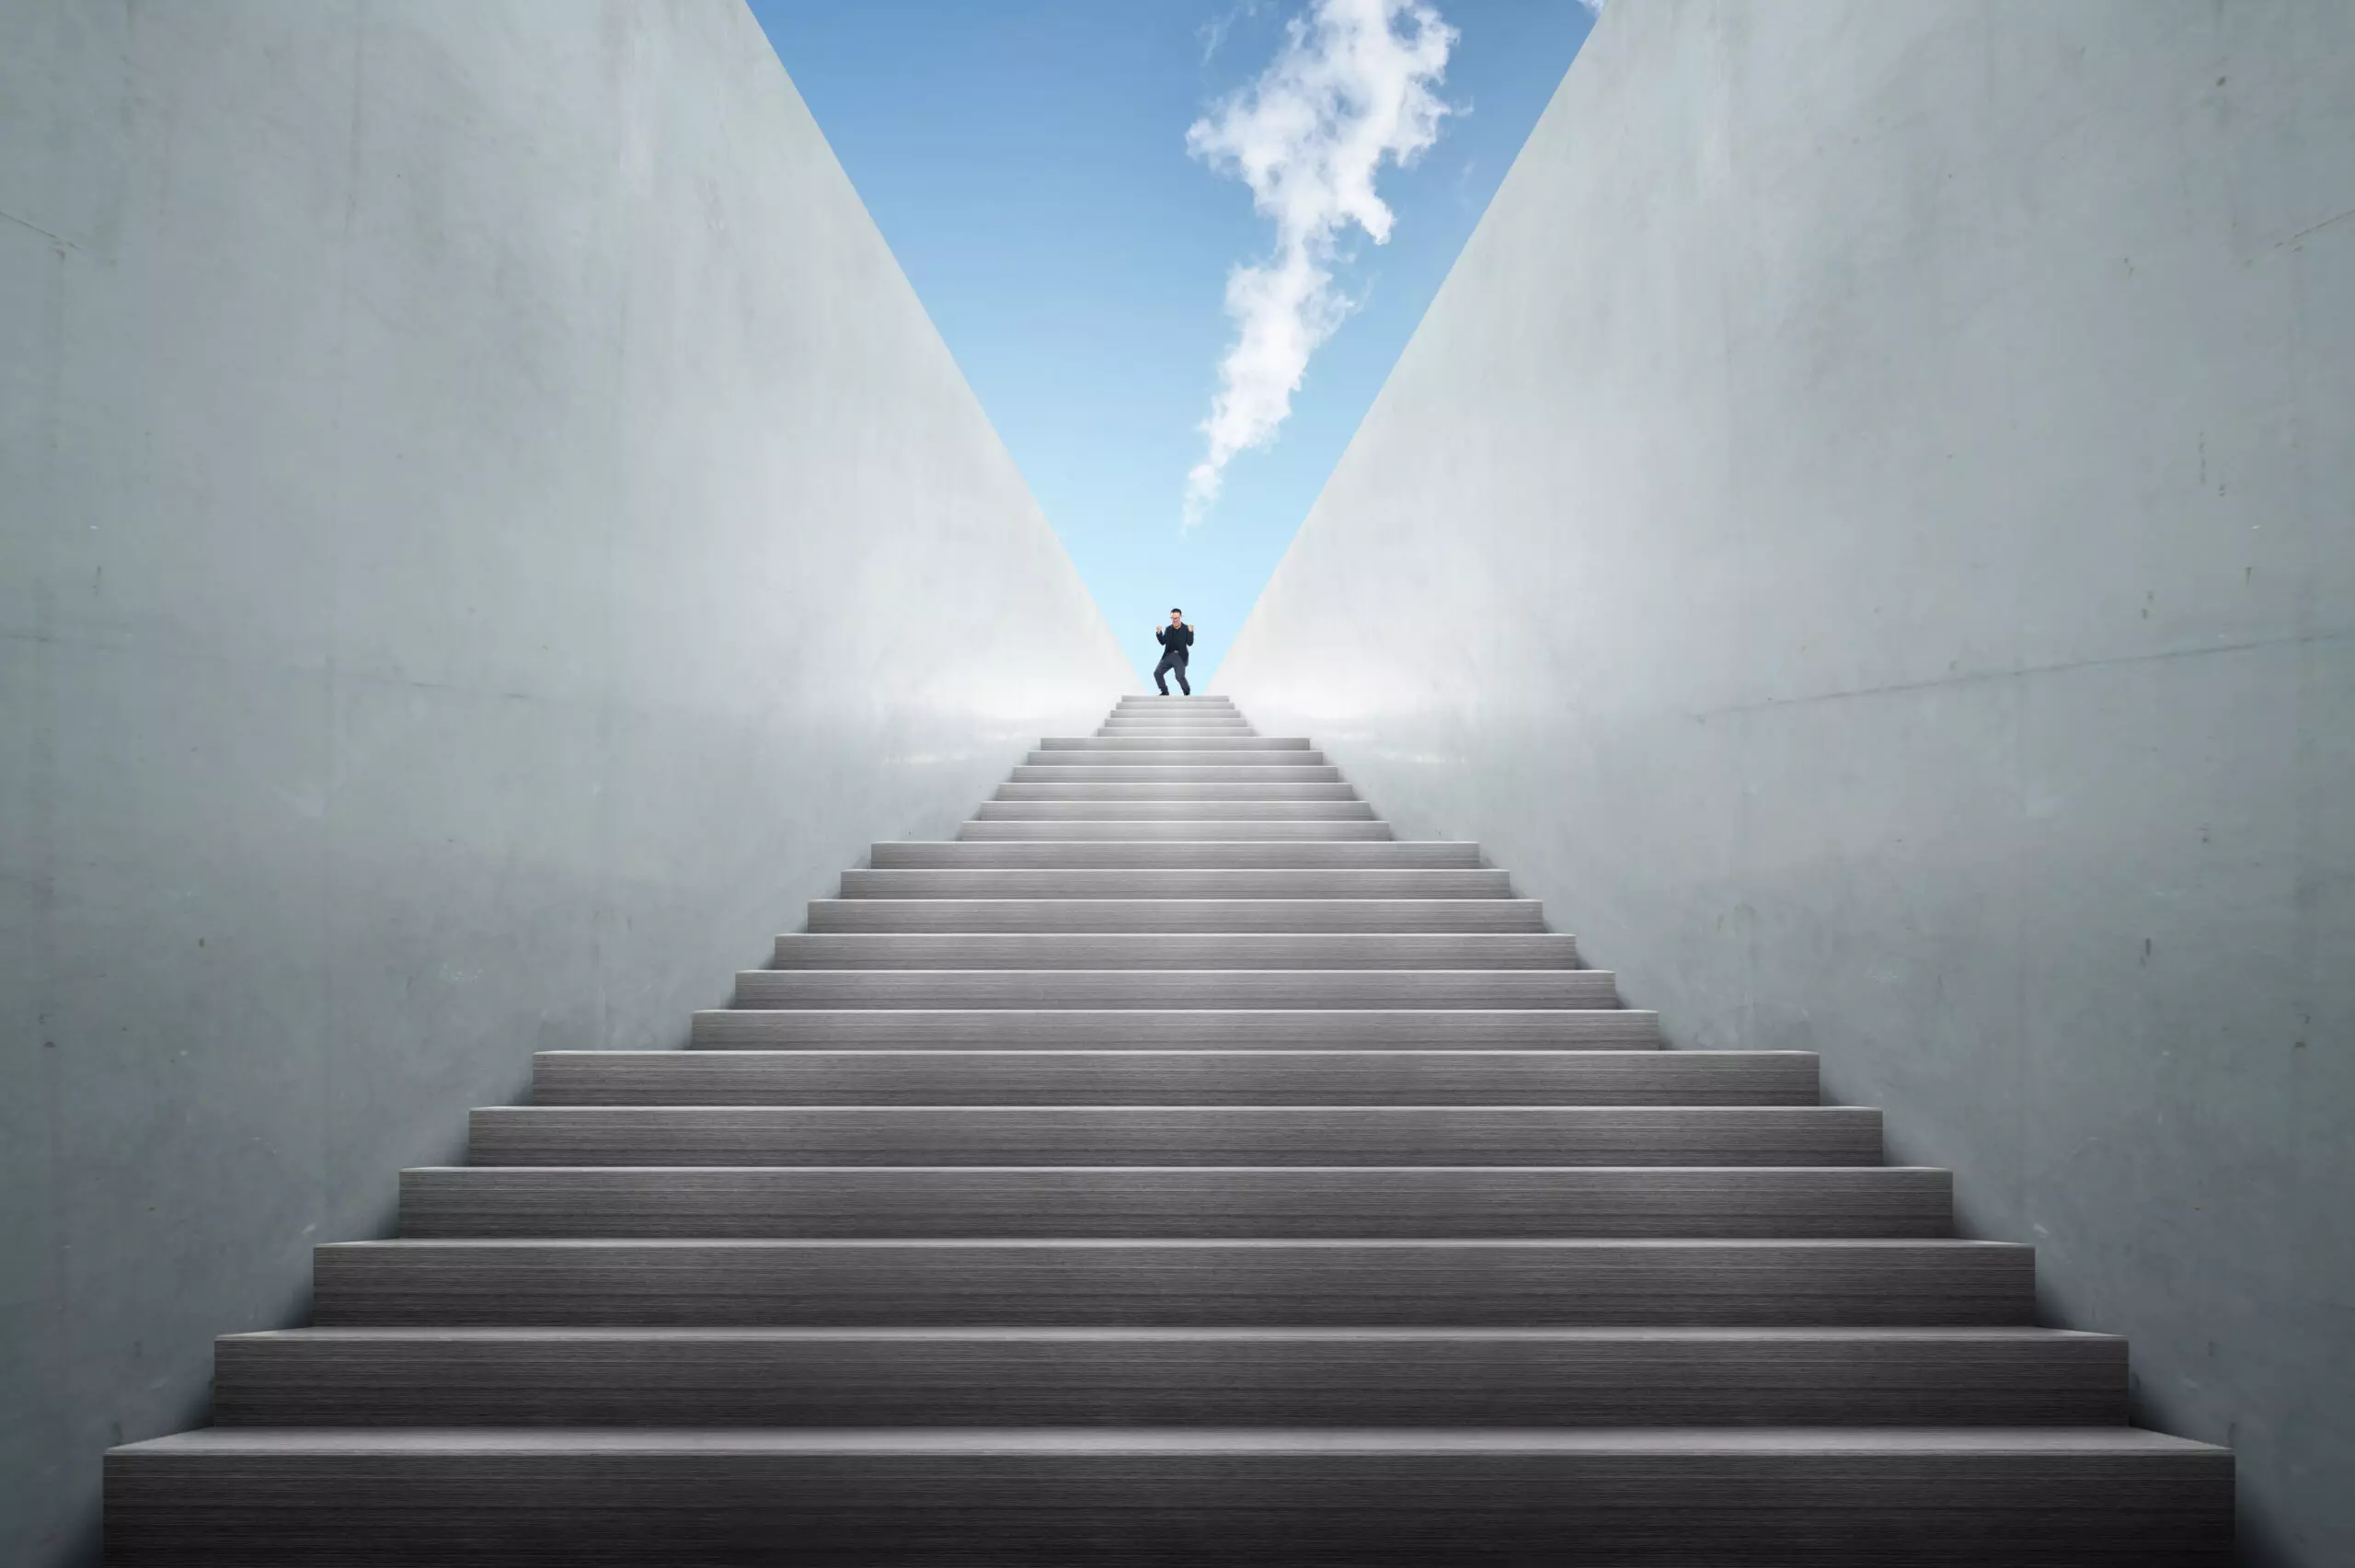 Person ascending vast concrete staircase towards sky.